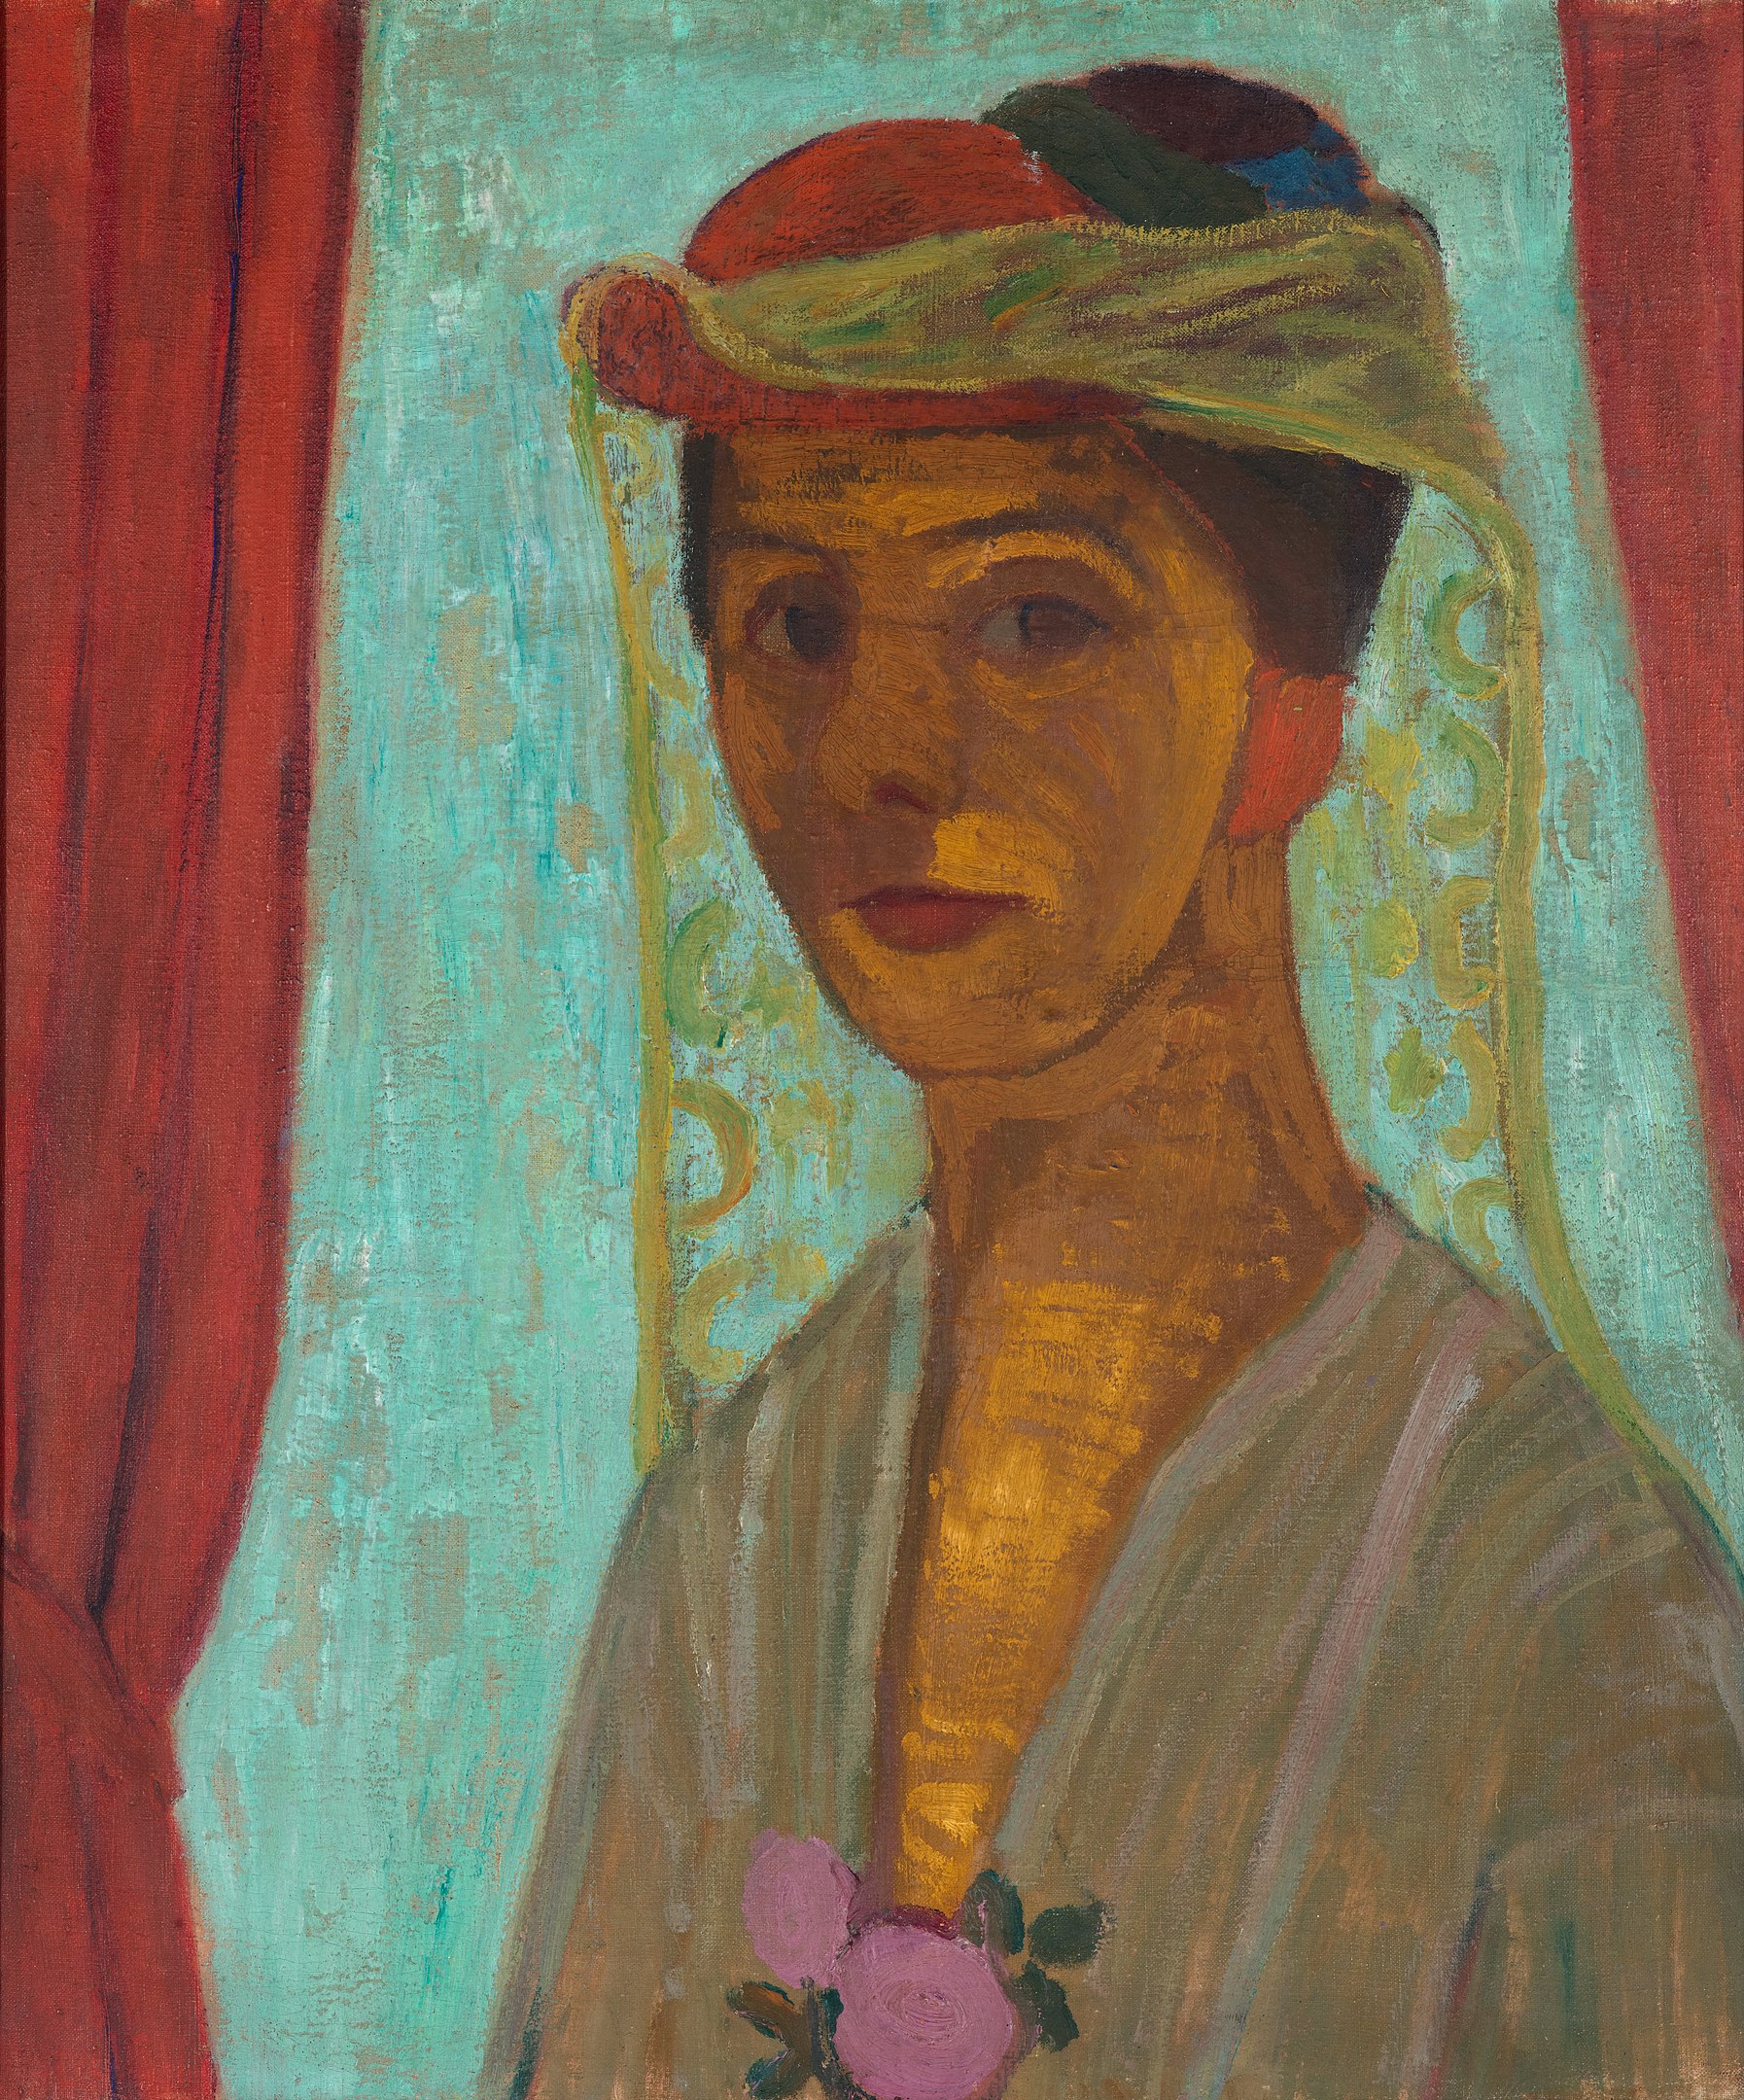 Autoportret cu pălărie și voal by Paula Modersohn-Becker - 1906/1907 - 79,8 x 89,6 cm 